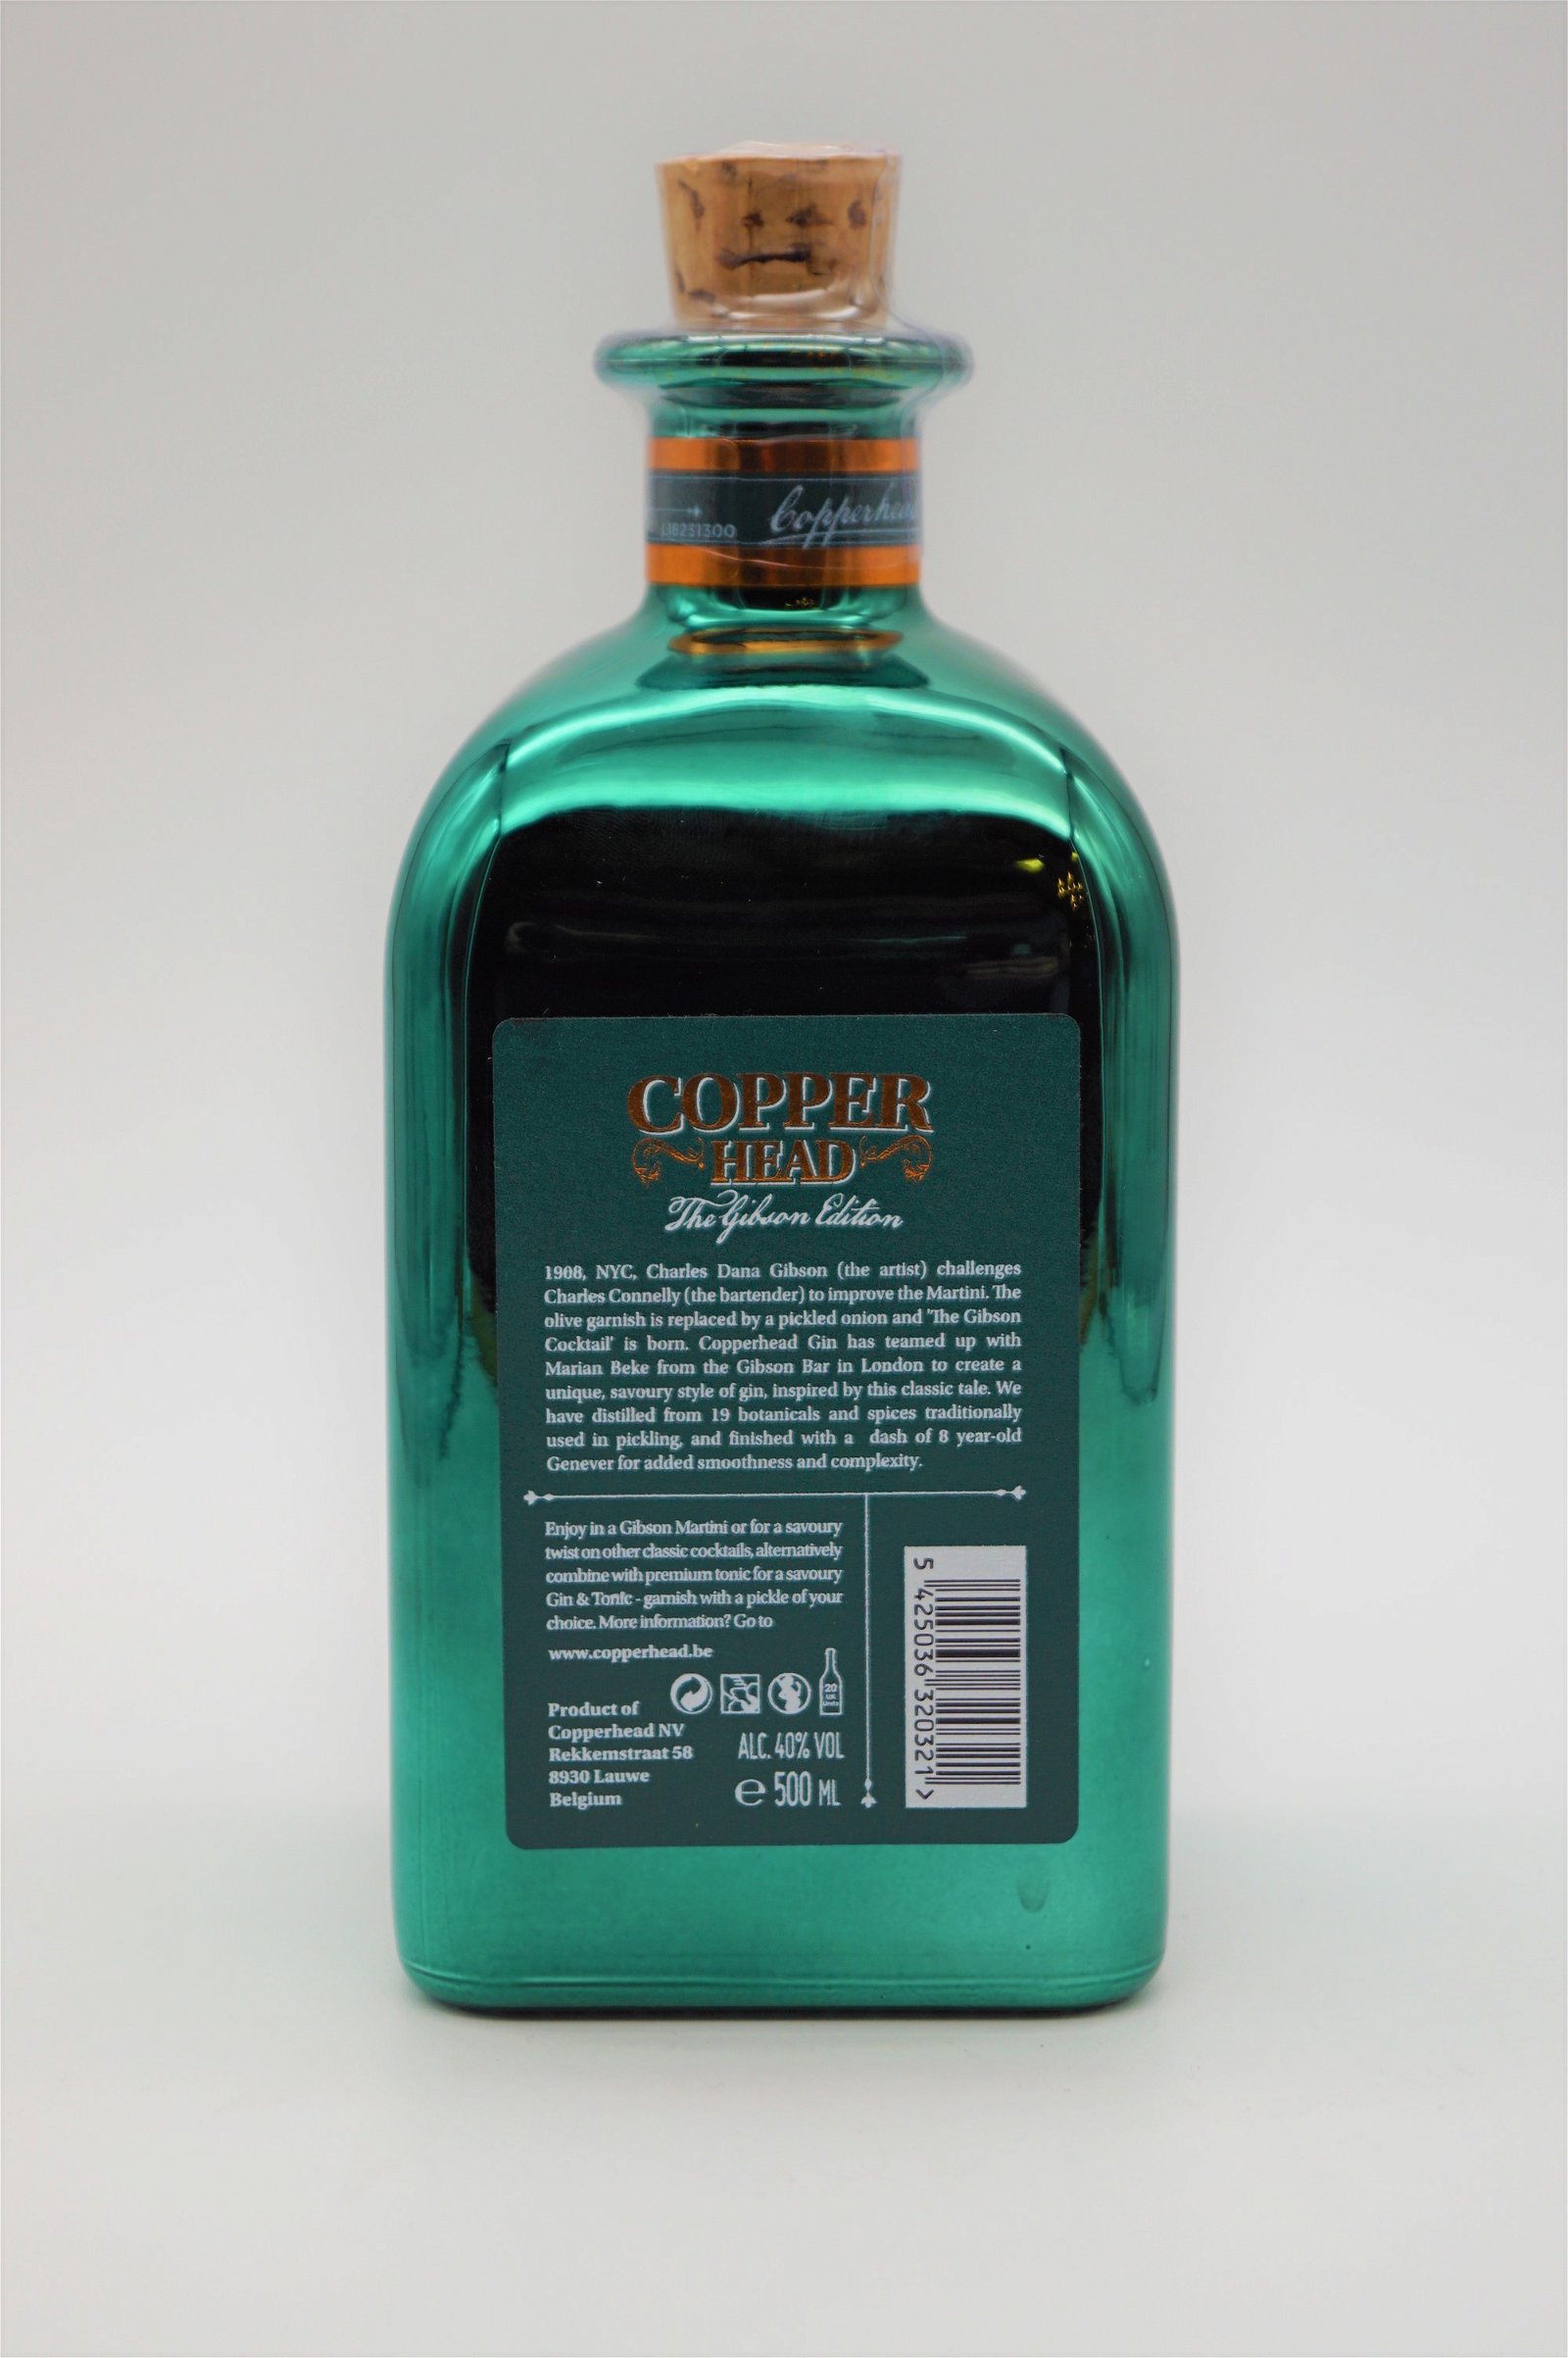 Copperhead Gibson Edition Gin